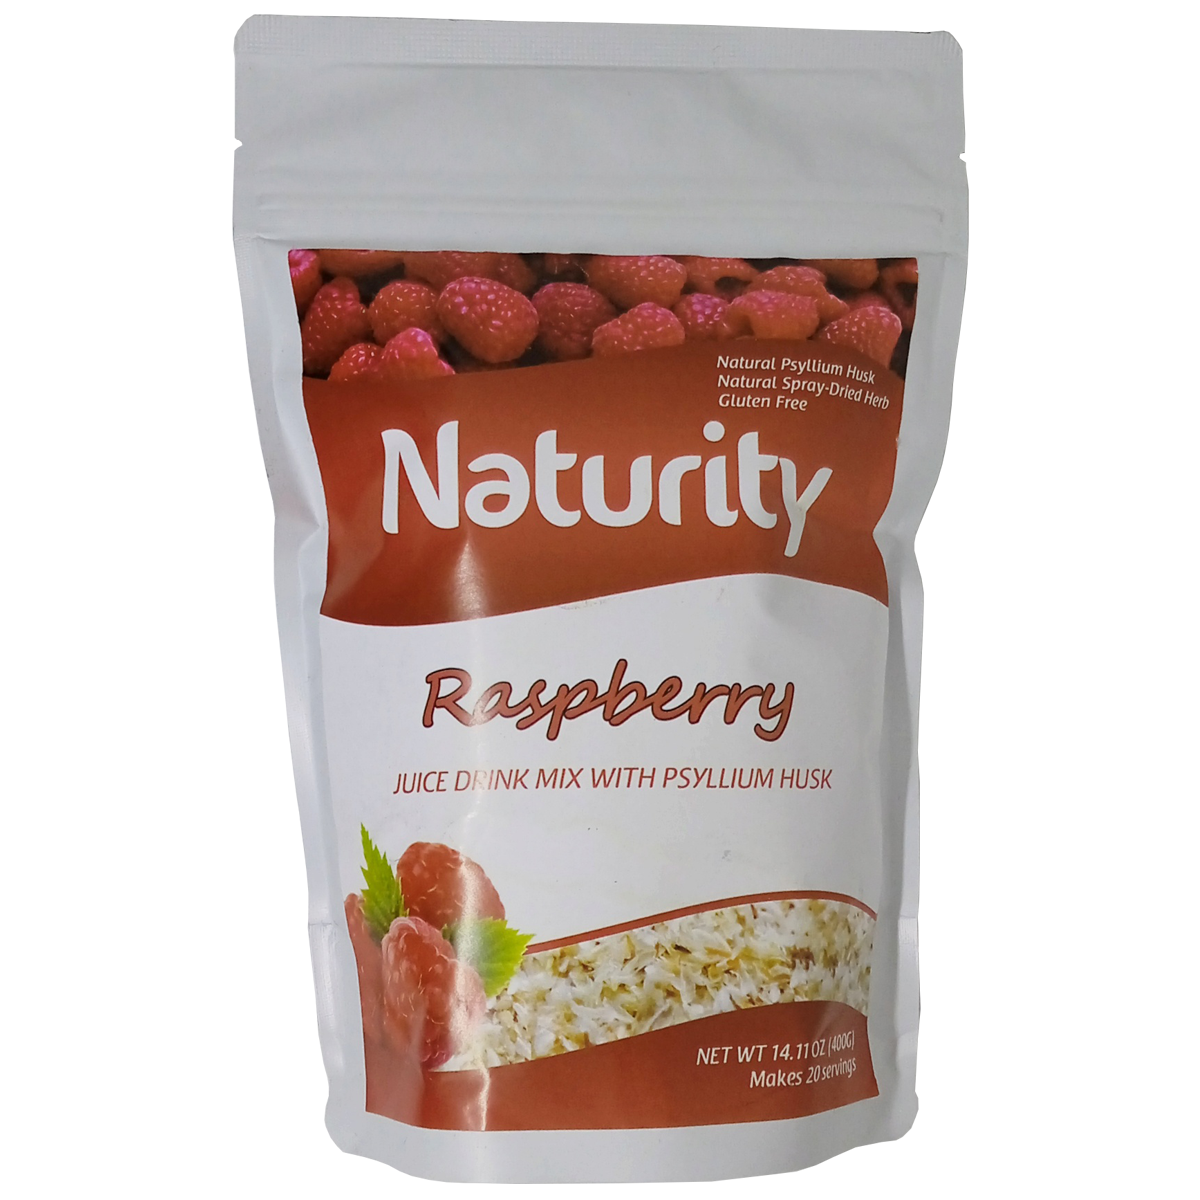 Naturity Raspberry Juice Drink mix With Psyllium Husk, 400g